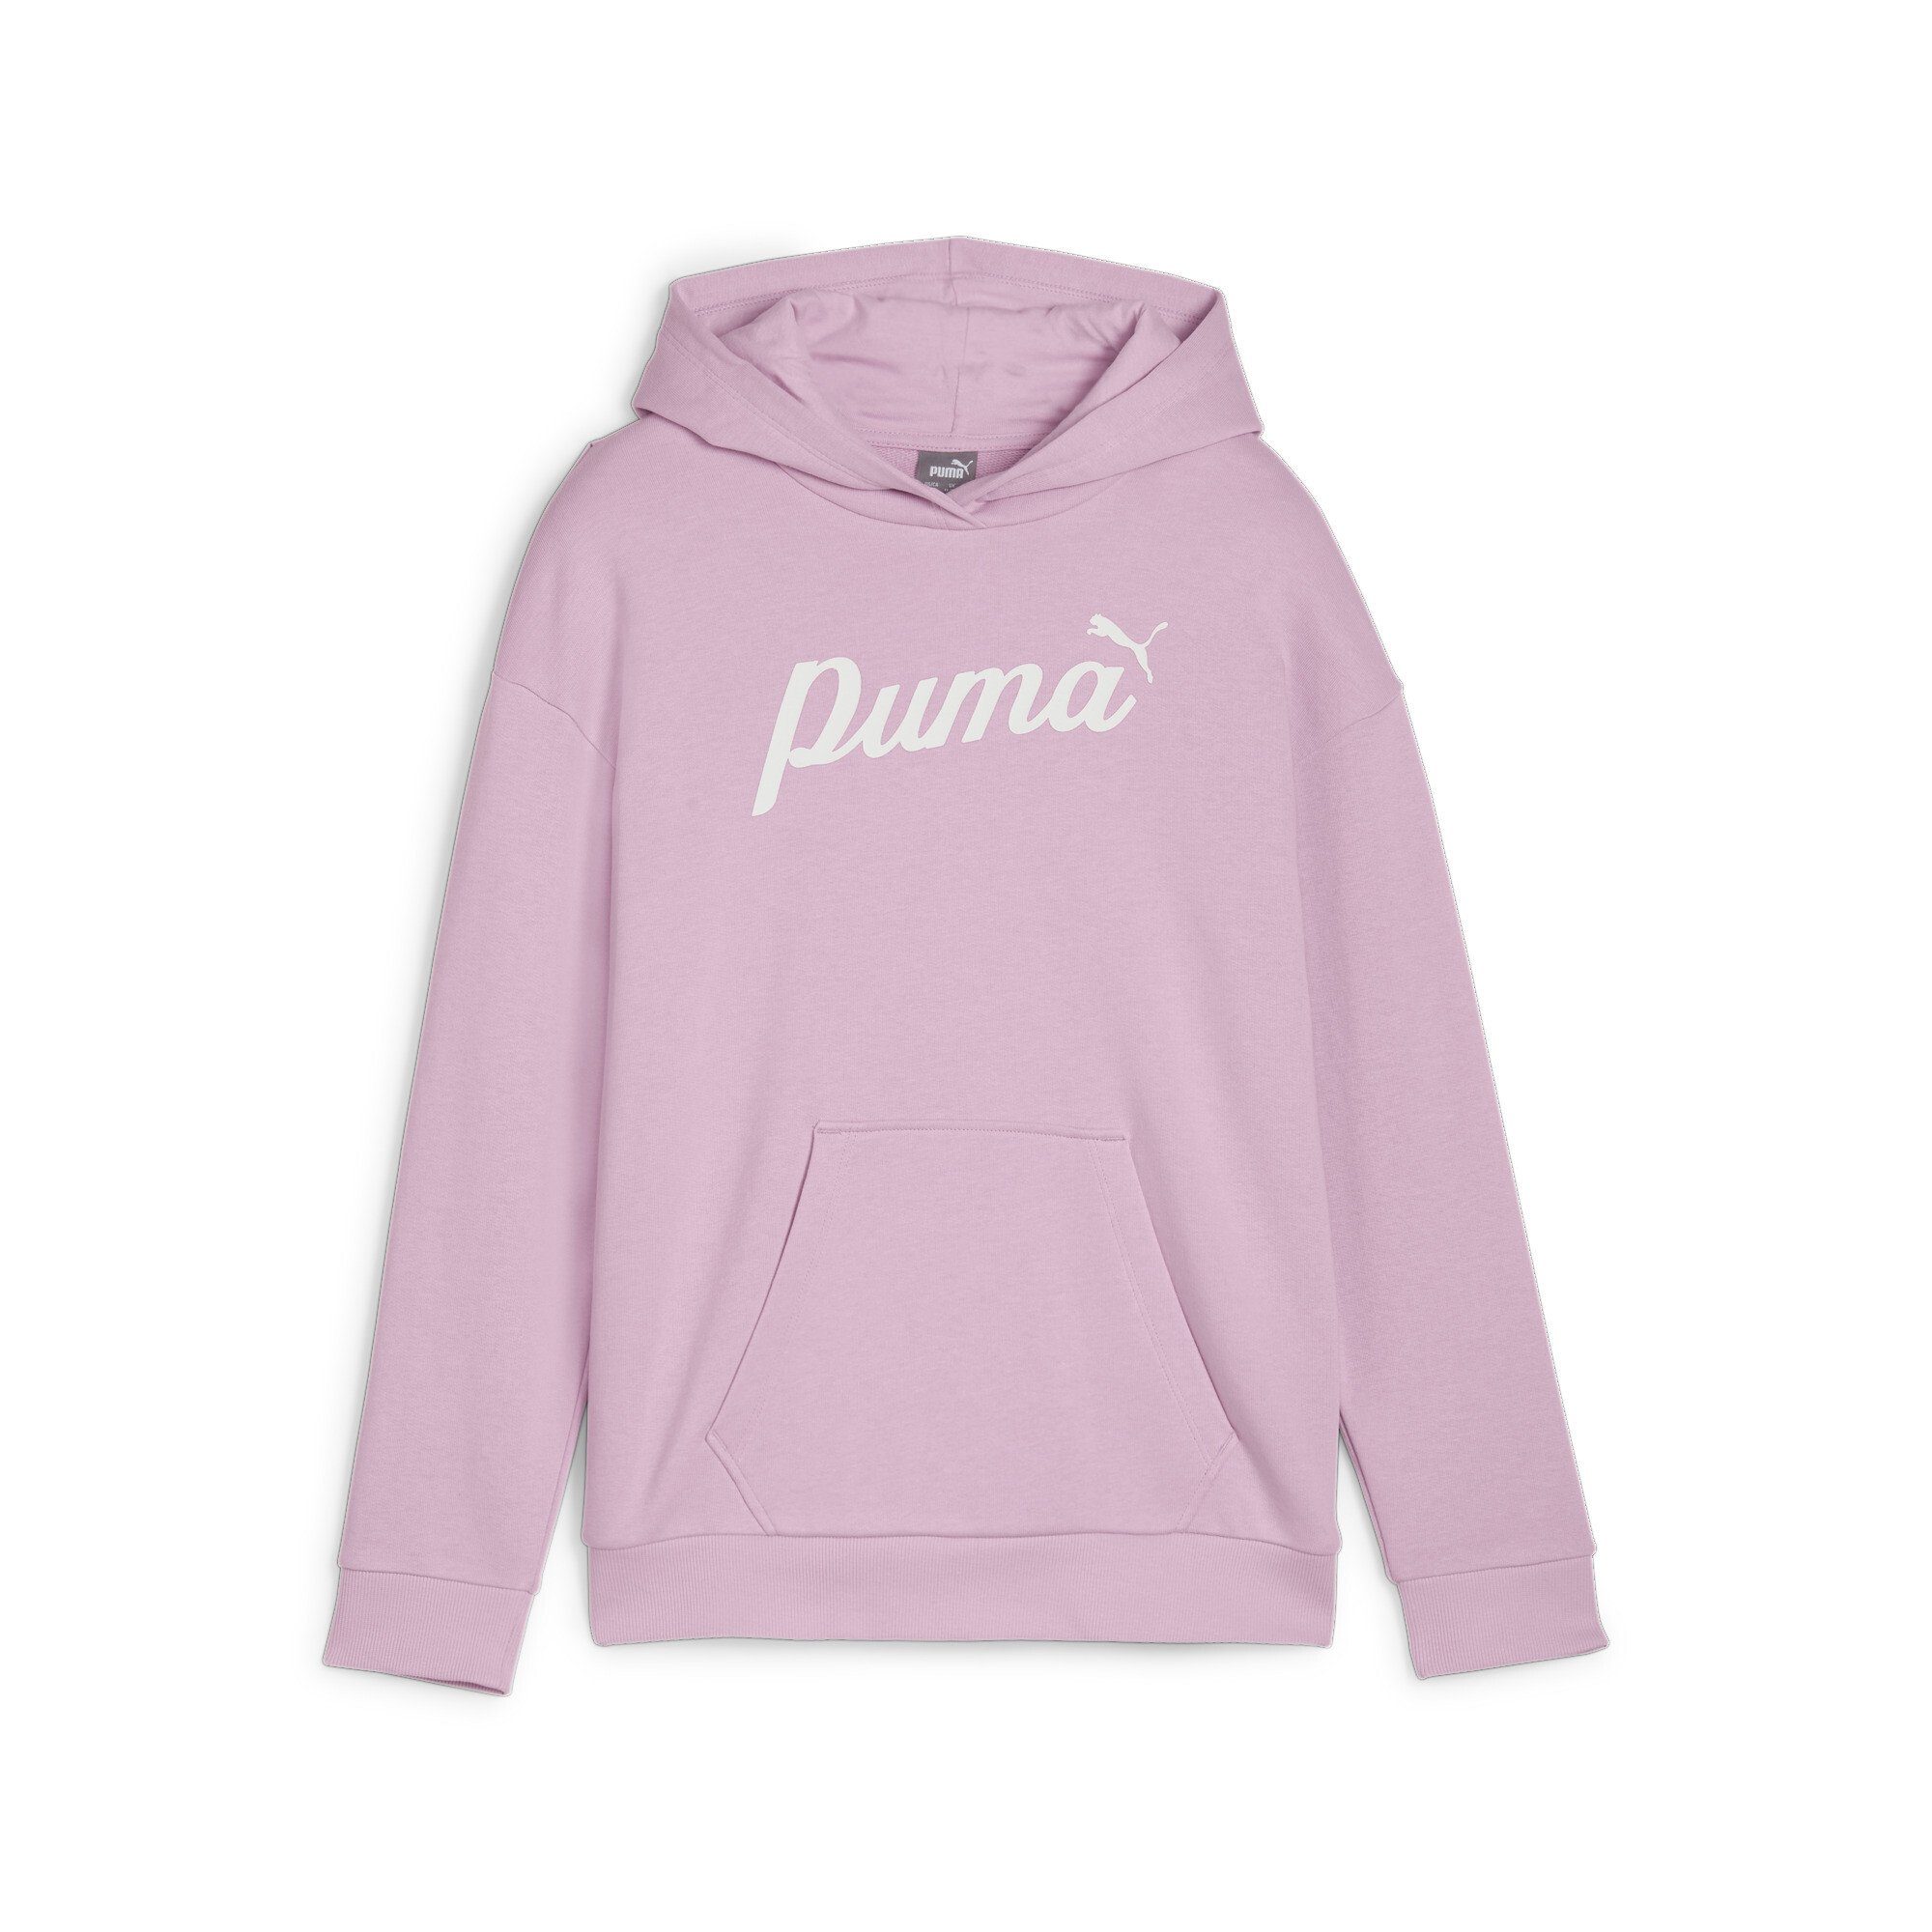 Puma hoodie lila Trui Paars Katoen Capuchon Printopdruk 128